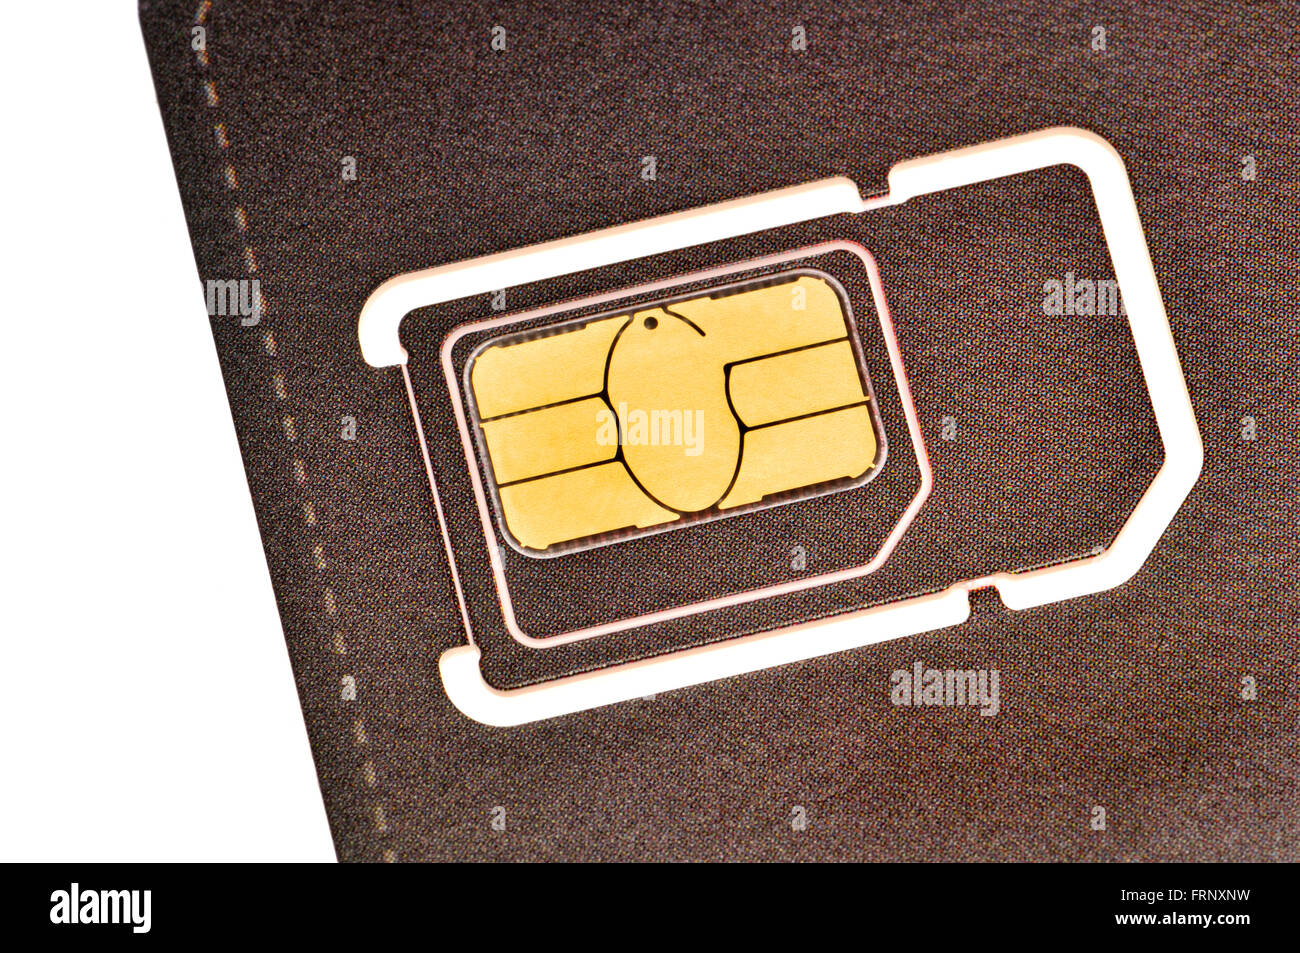 Smartphone Sim card (Vodafone) Stock Photo